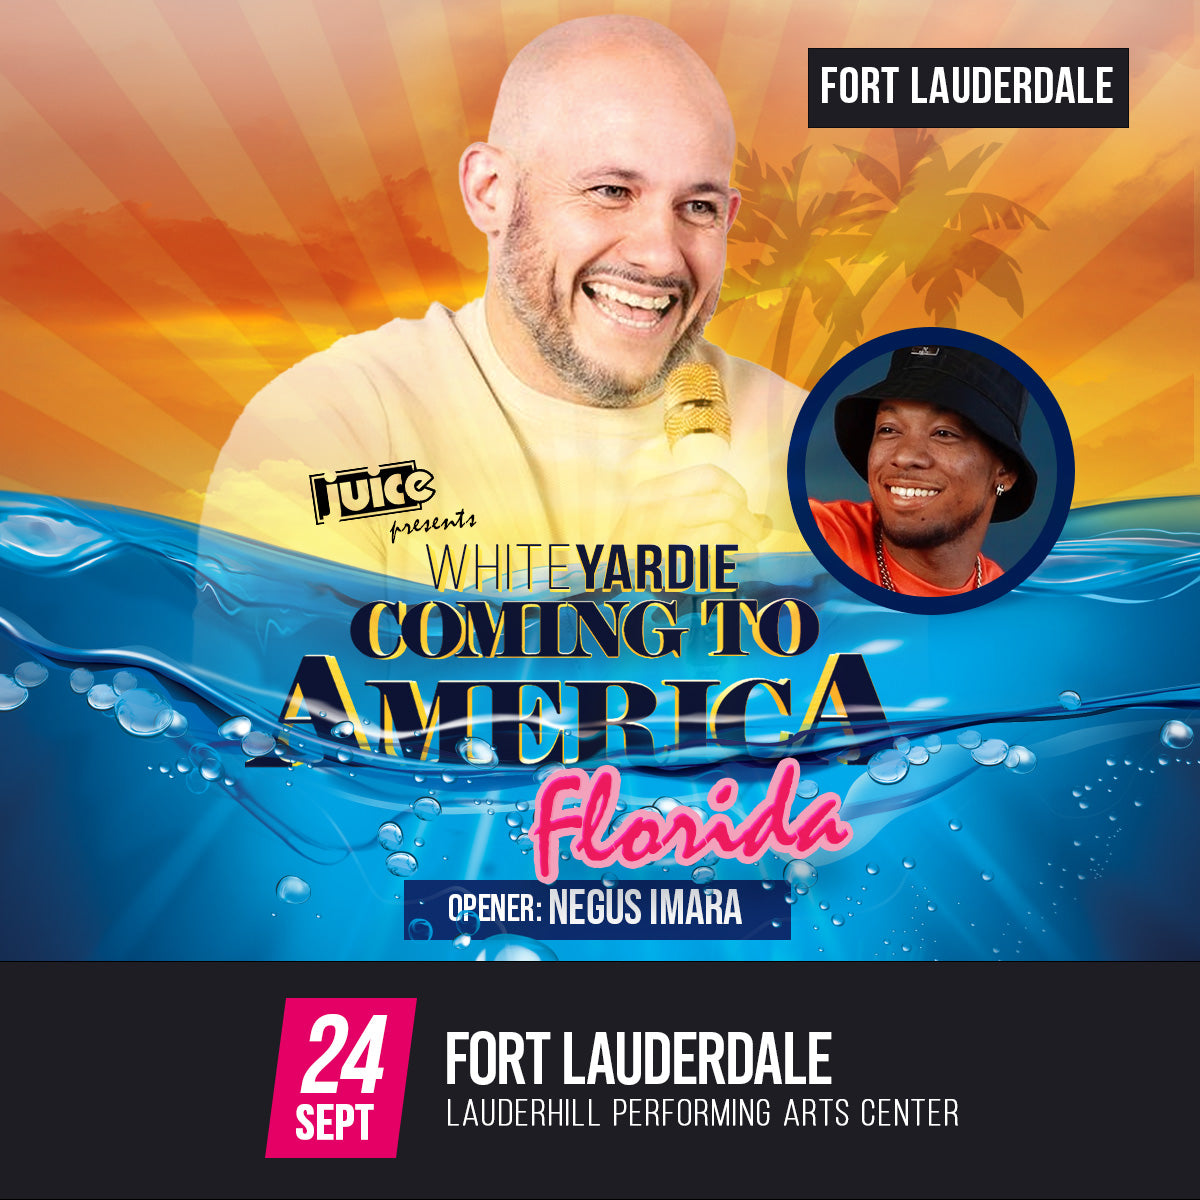 FT LAUDERDALE - JUICE Comedy pres White Yardie's "Coming to America" FLORIDA feat. Negus Imara